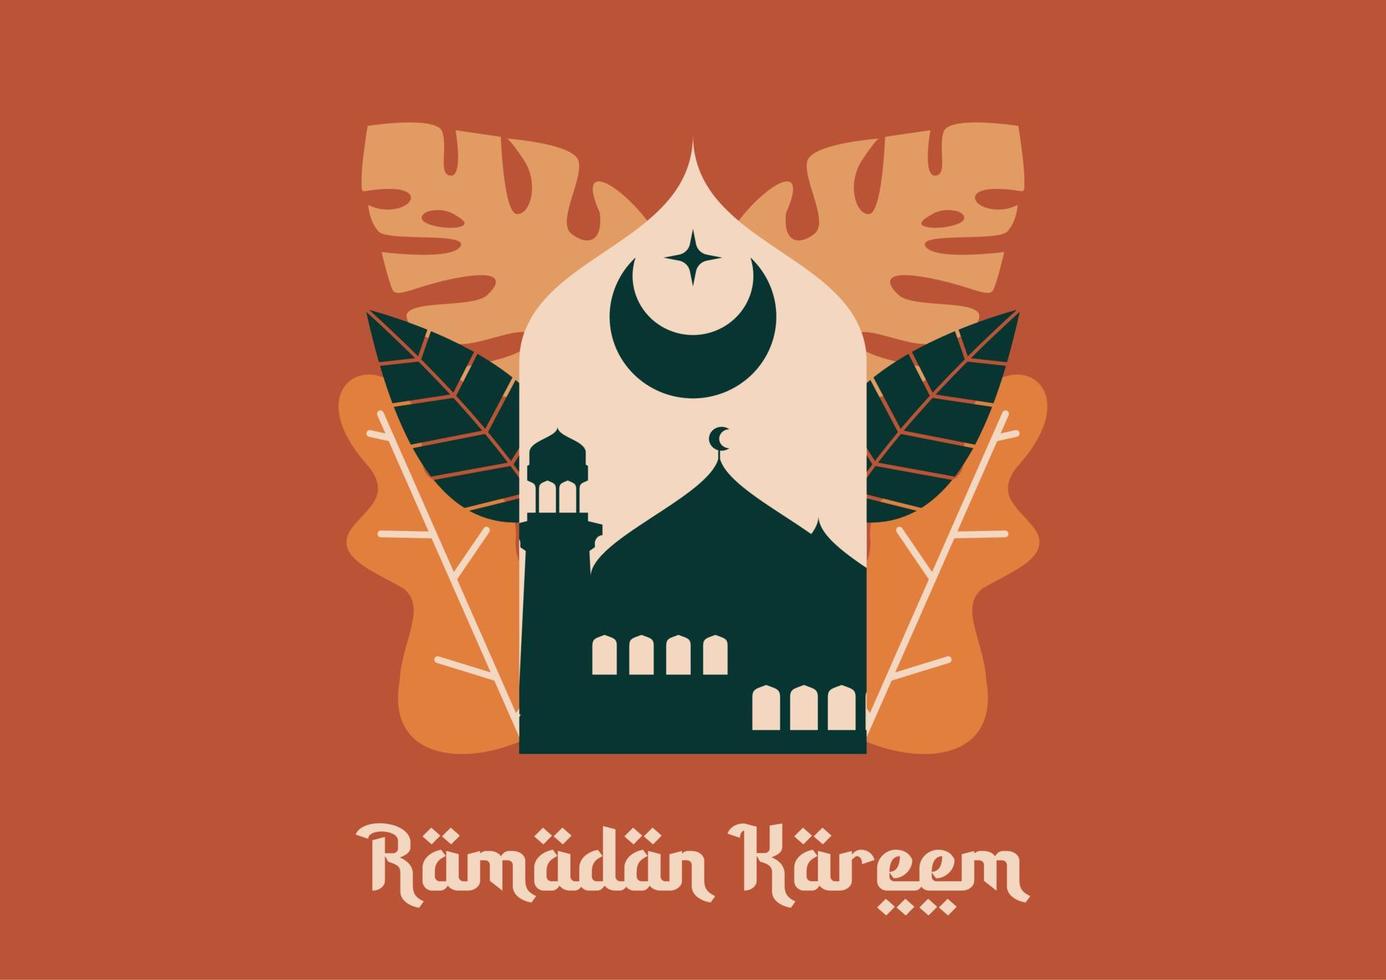 Ramadan Kareem. Islamic greeting card template with ramadan for wallpaper design. Poster, media banner. A set of vector illustrations. Ramadan collection vector.